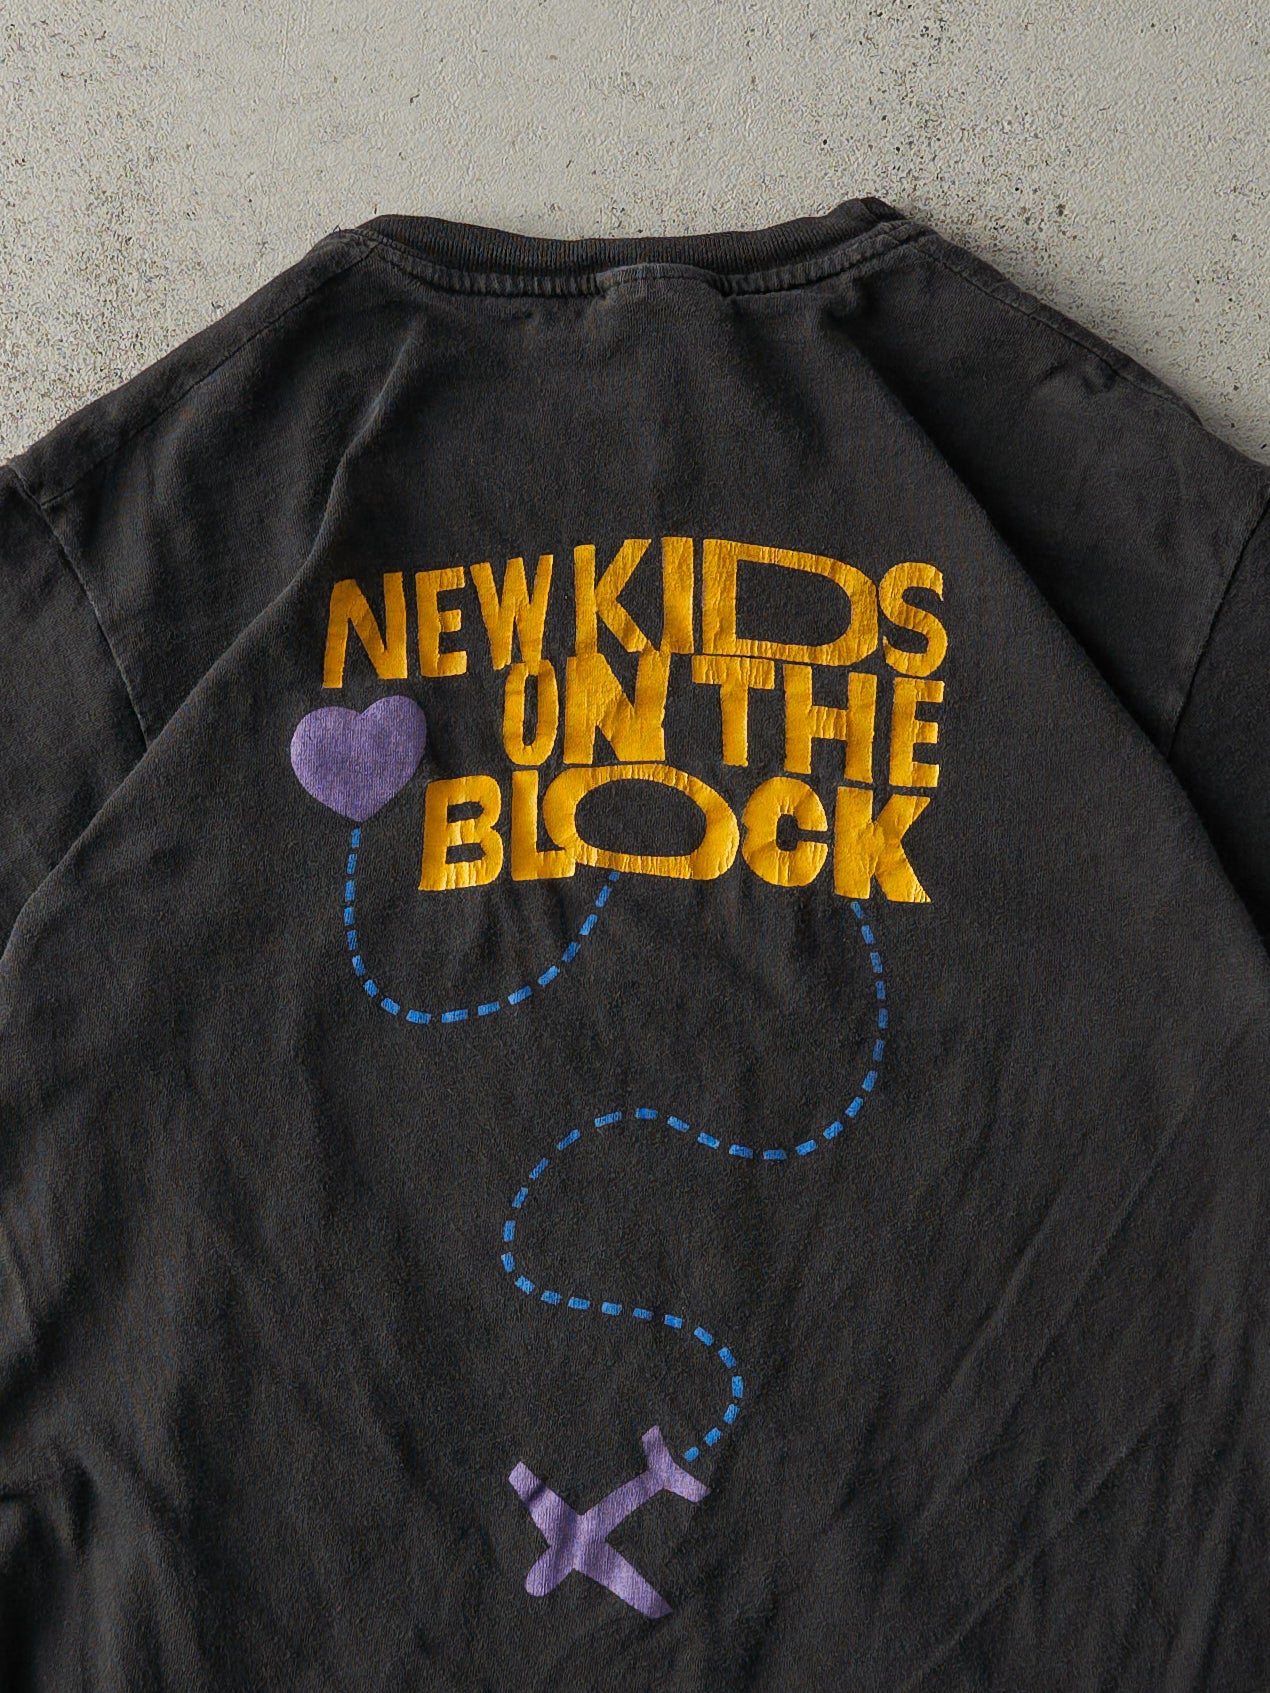 Vintage 90' Black New Kids On The Block Band Tee (S)